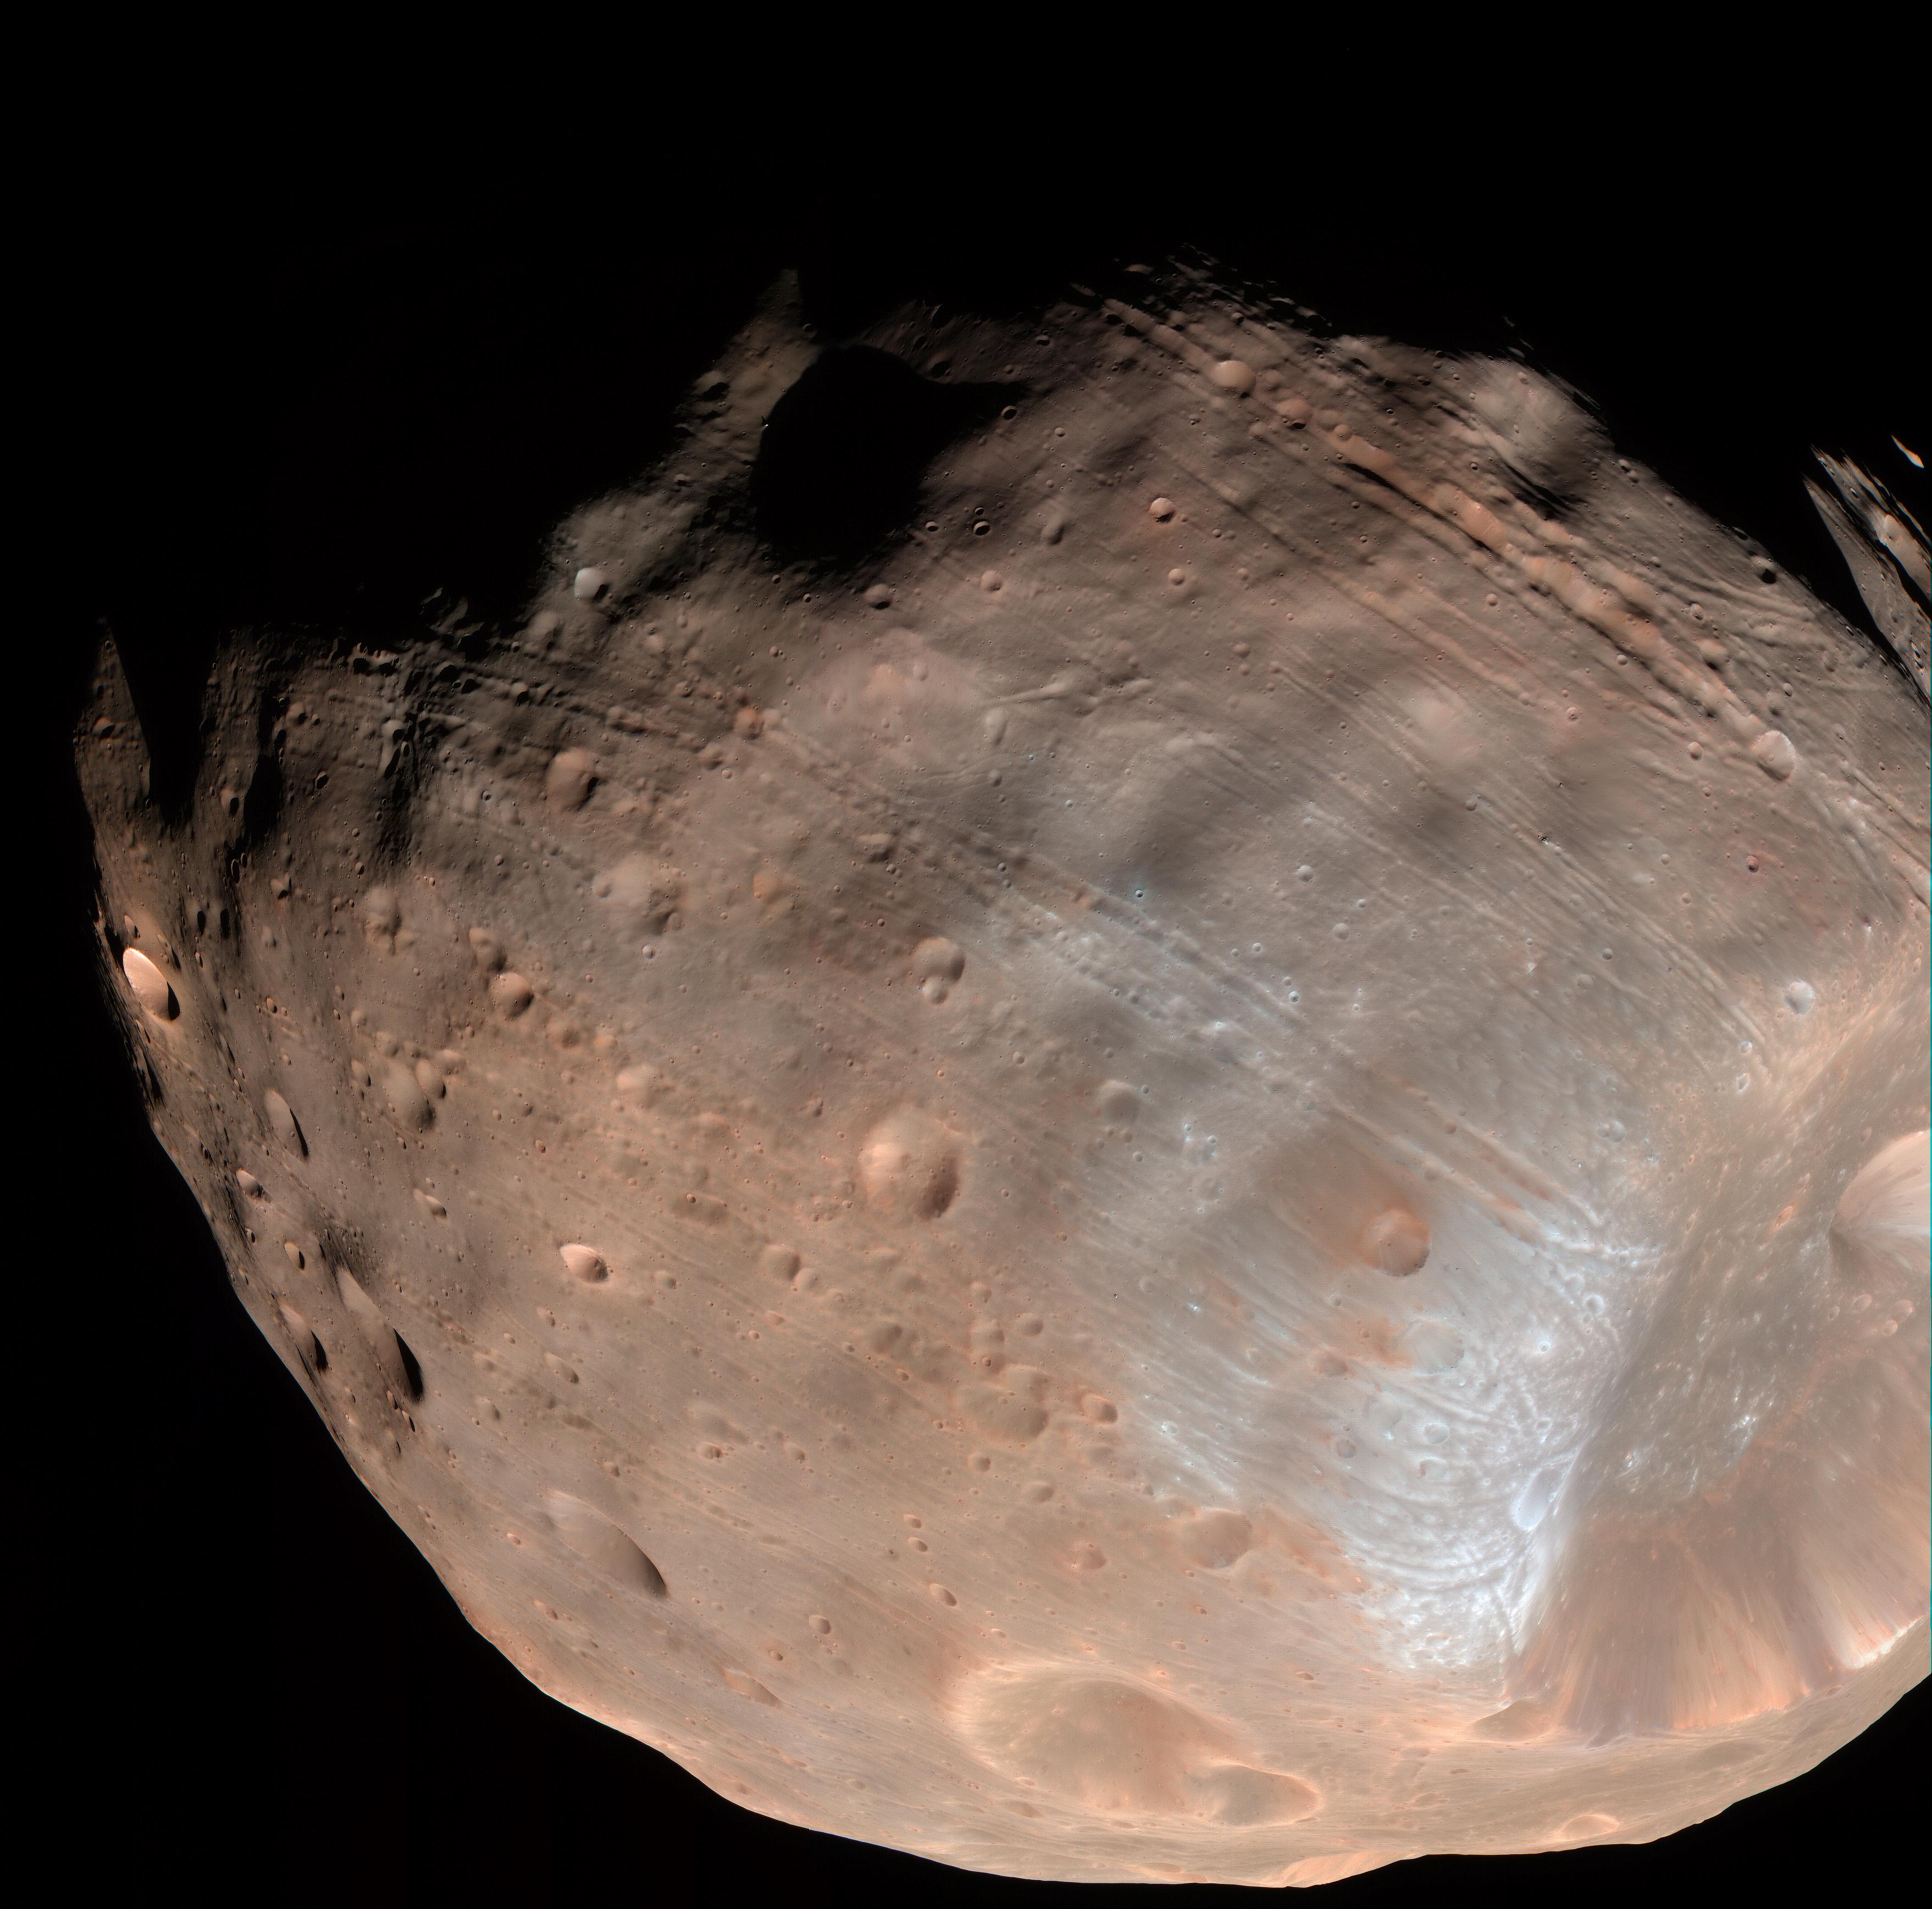 Mars’ moon Phobos is slowly disintegrating